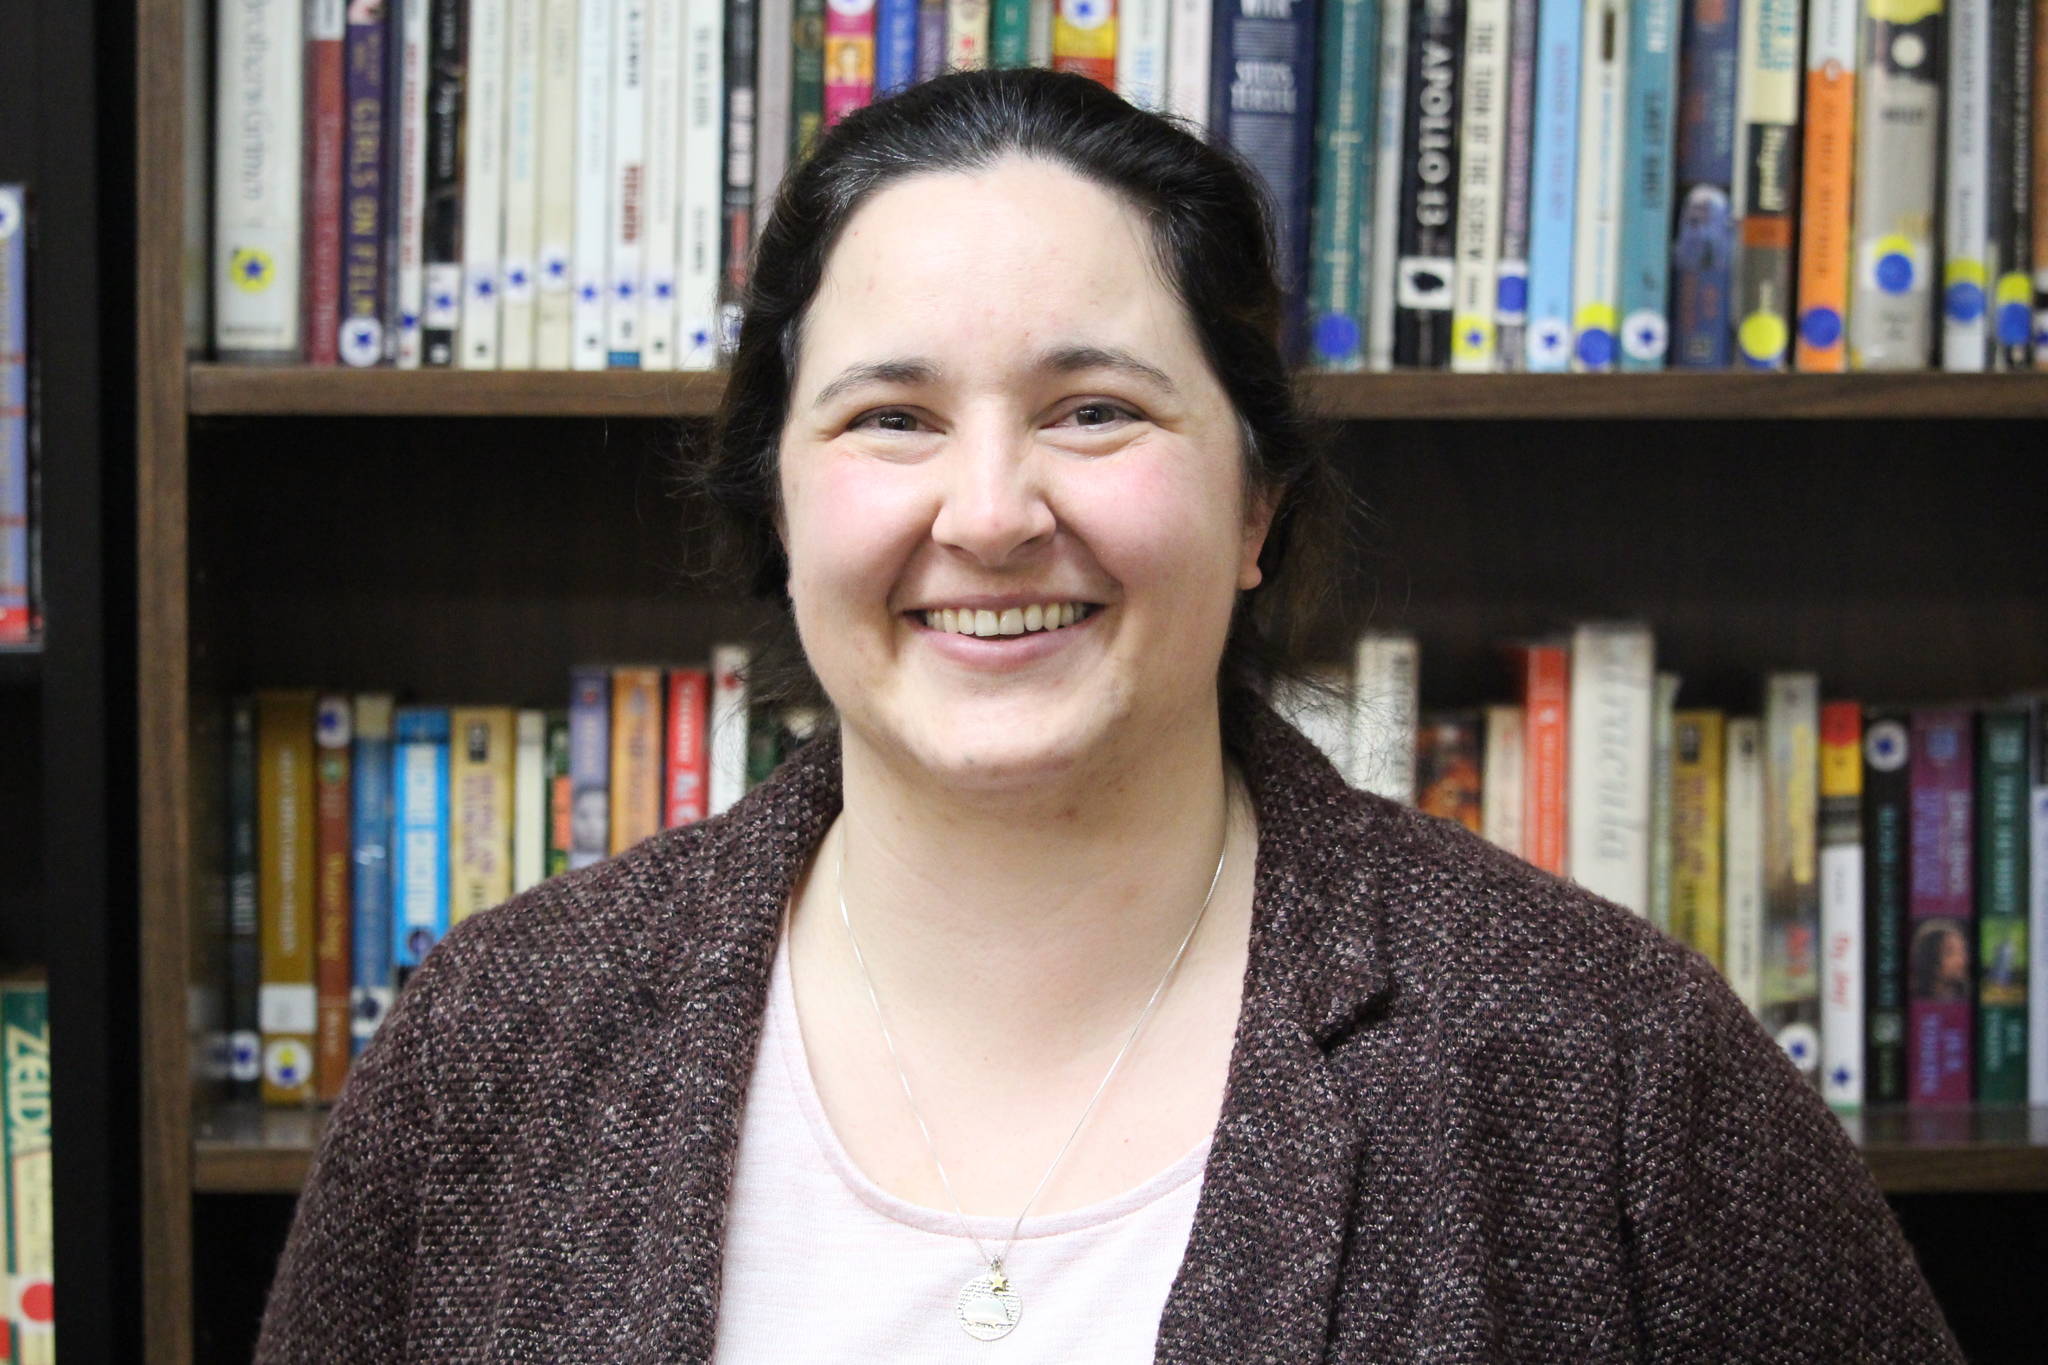 Meredith McCullough, language arts teacher at Kenai Central High School, is seen here at Kenai Central High School in Kenai, Alaska, on Jan. 21, 2020. (Photo by Brian Mazurek/Peninsula Clarion)